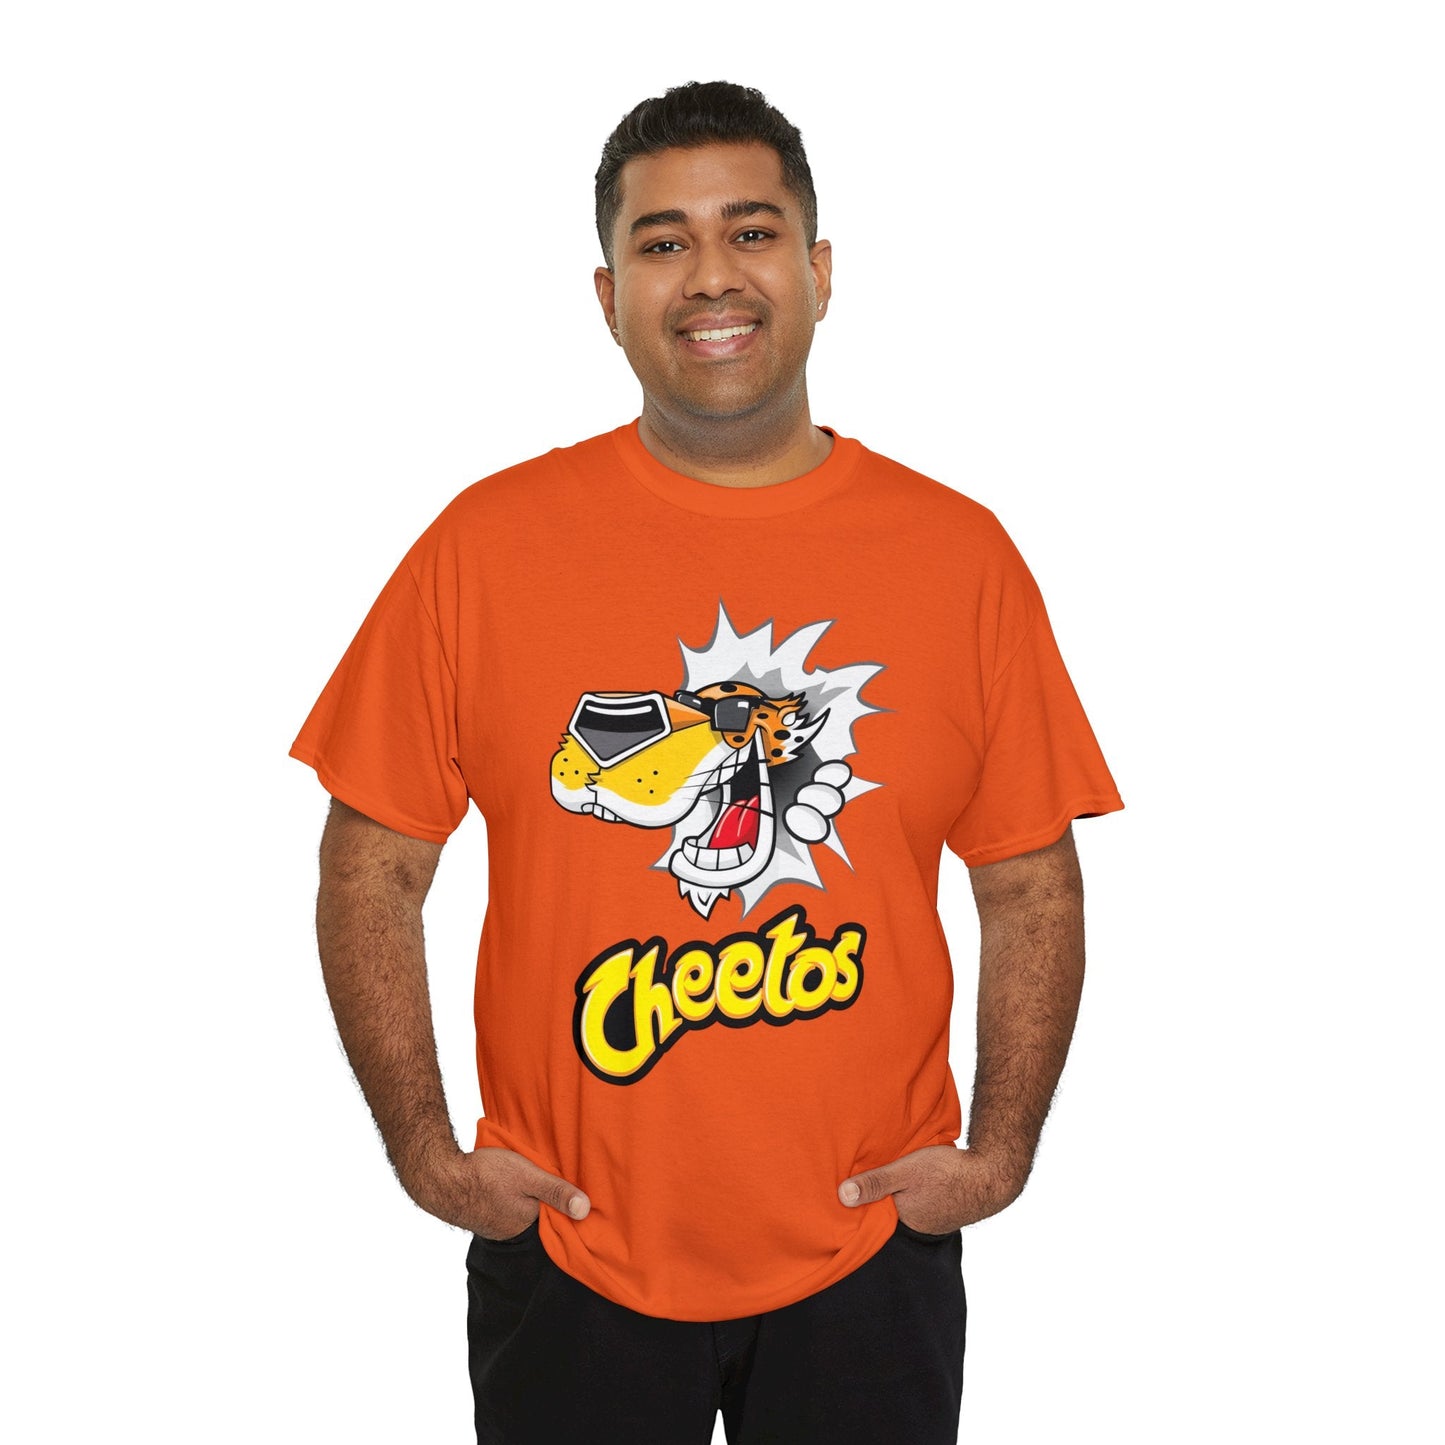 Cheetos T-Shirt - RetroTeeShop